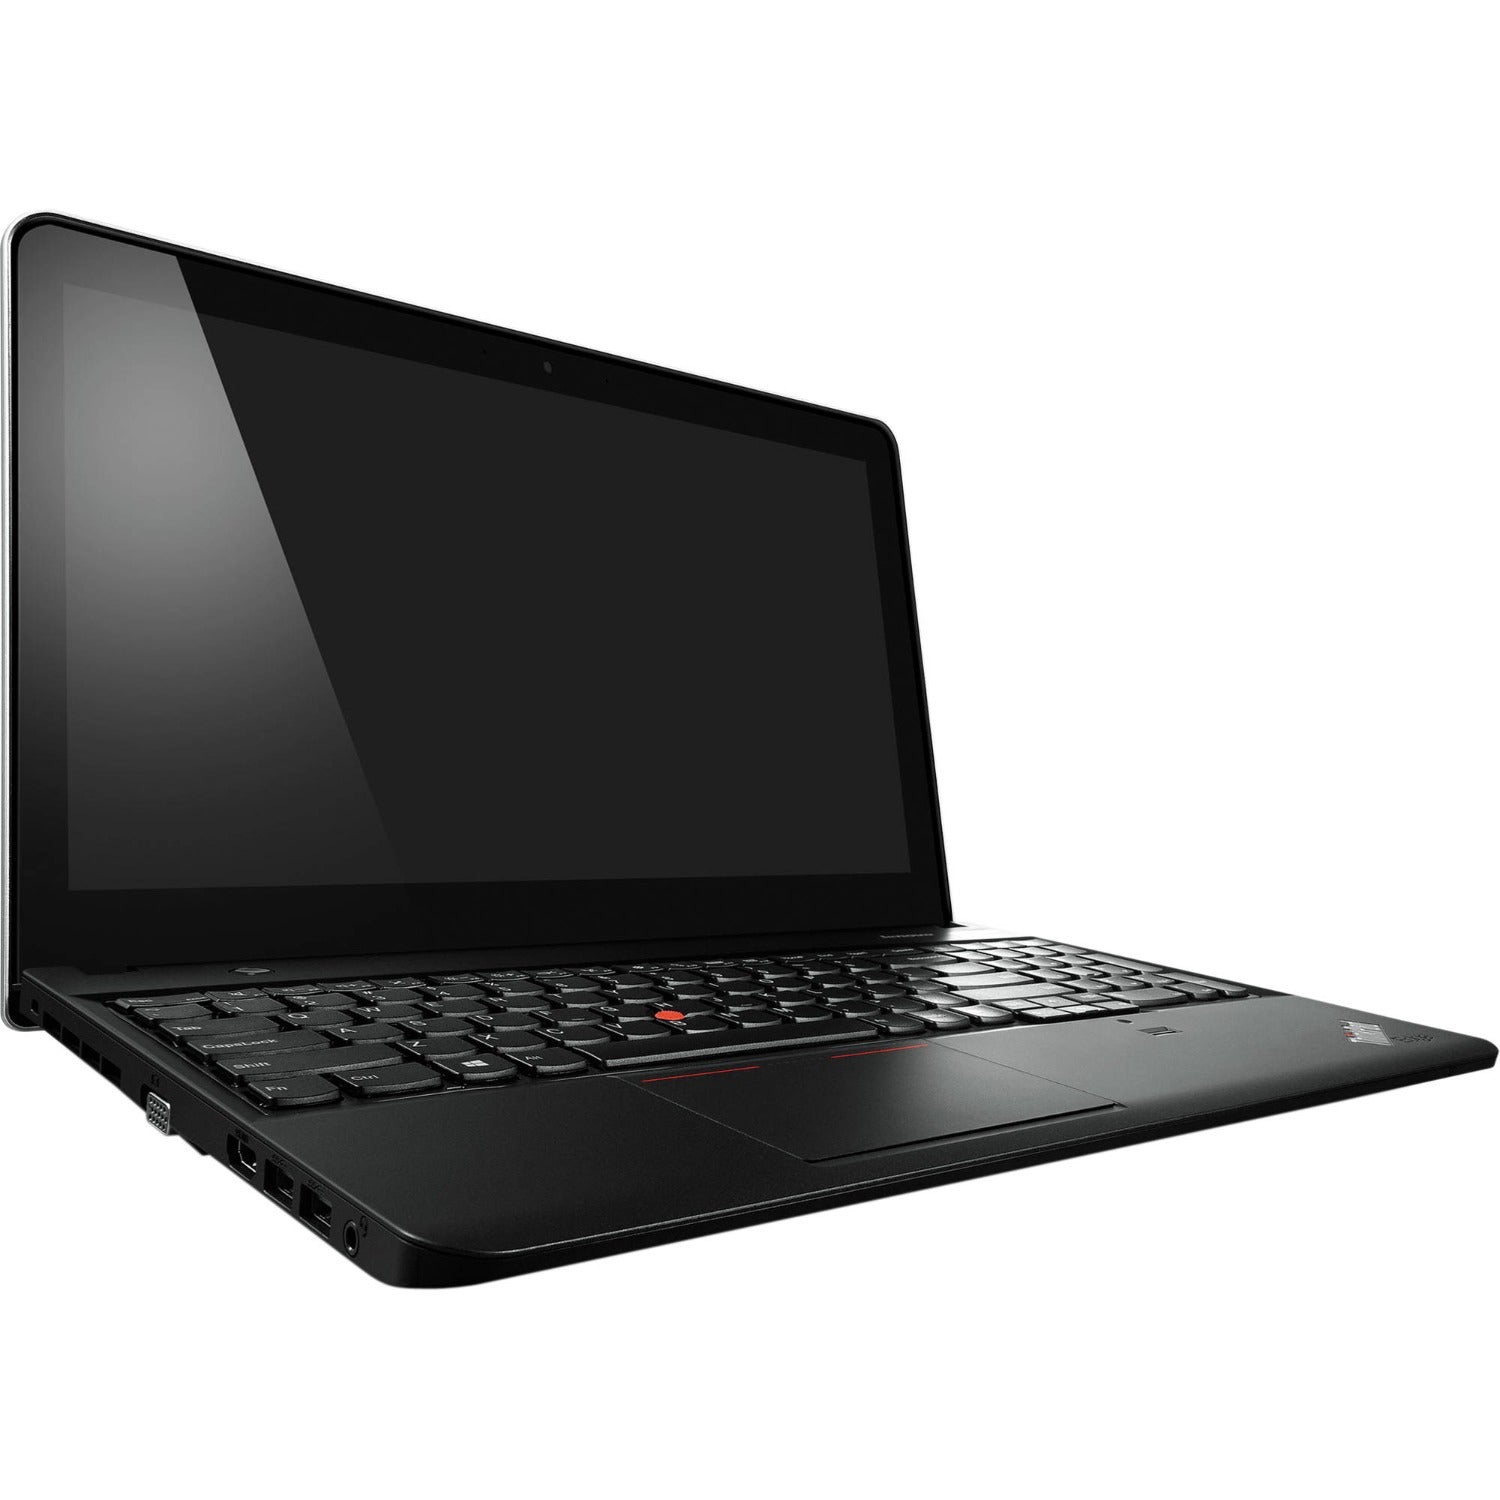 Lenovo ThinkPad E540 15.6" Laptop, Intel Core i5, 8GB RAM, 256GB SSD, Win10 Home. Refurbished